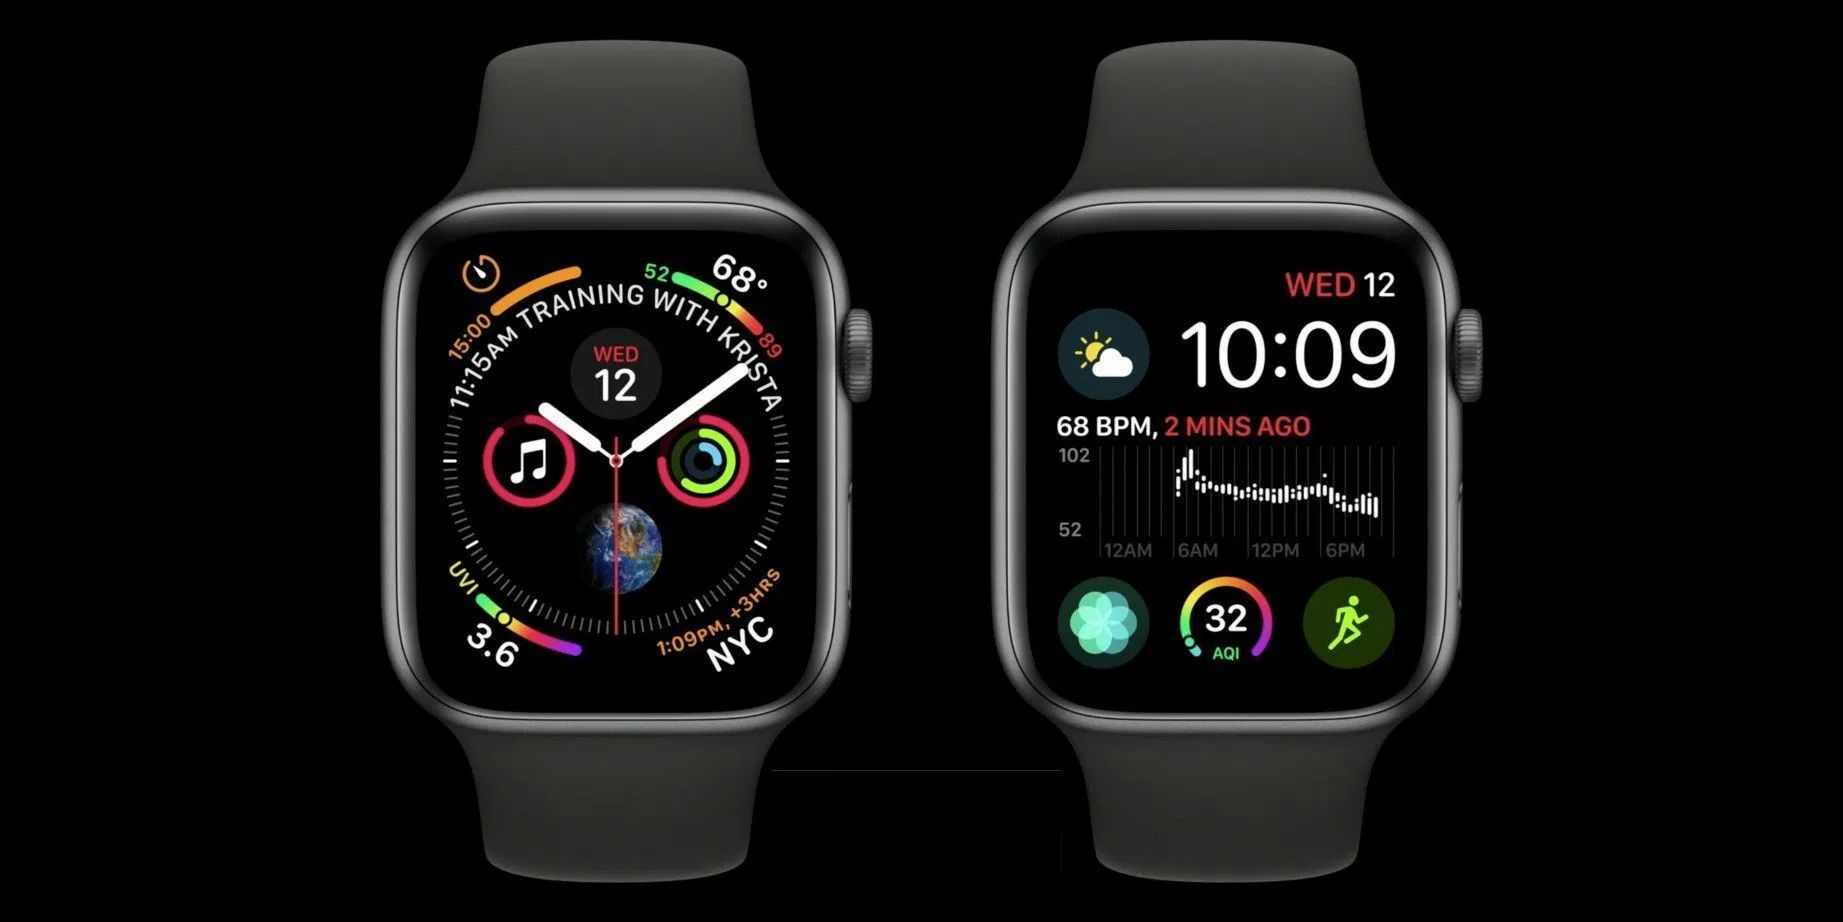 Apple Watch Sleep Tracking Revealed: Sleep Quality, Battery Management, More